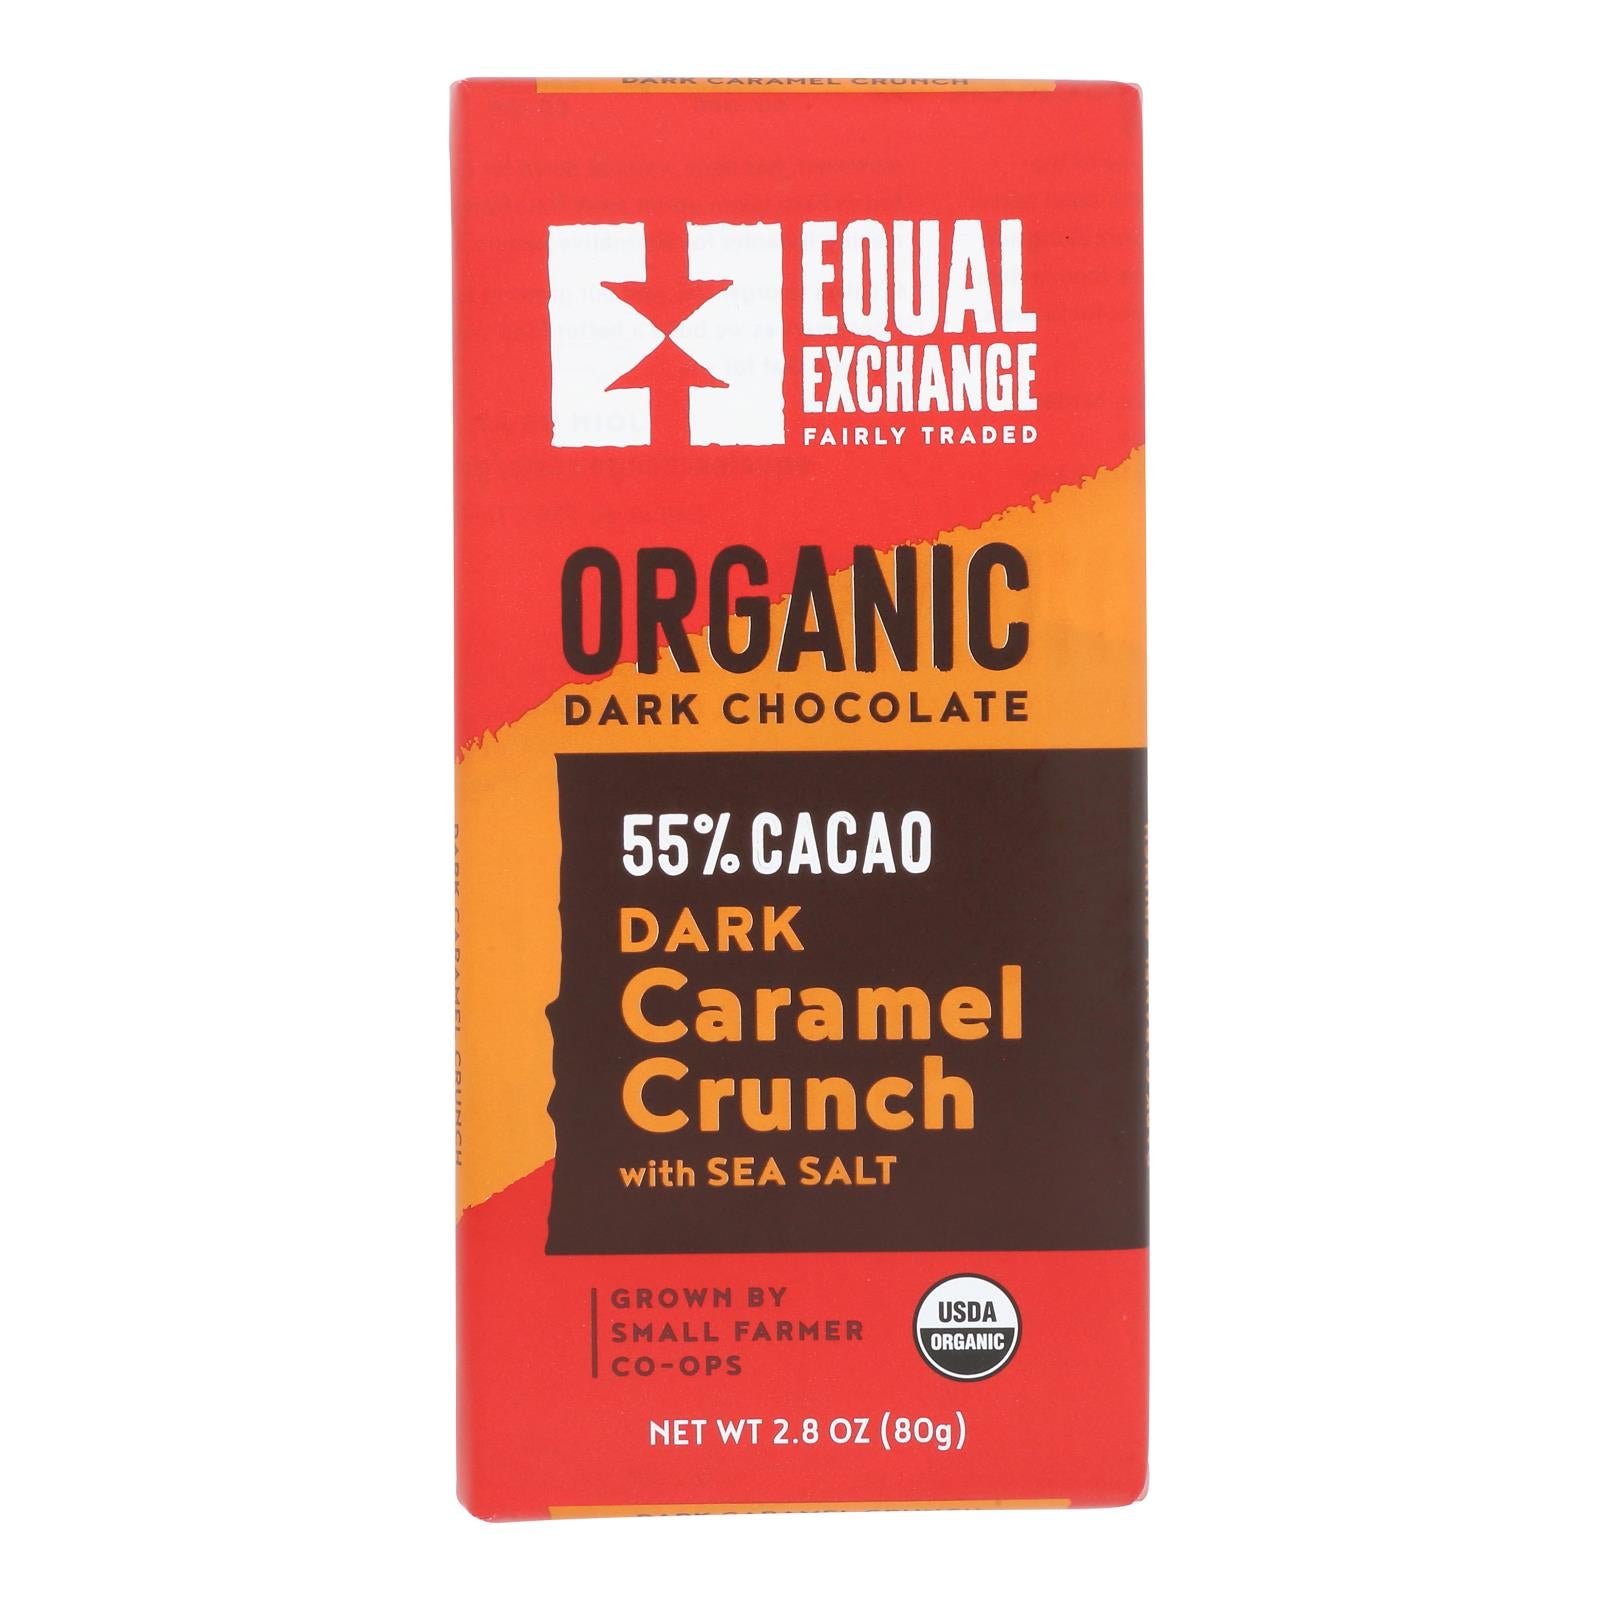 Equal Exchange Organic Milk Chocolate Bar - Caramel Crunch with Sea Salt - Case of 12 - 2.8 oz.